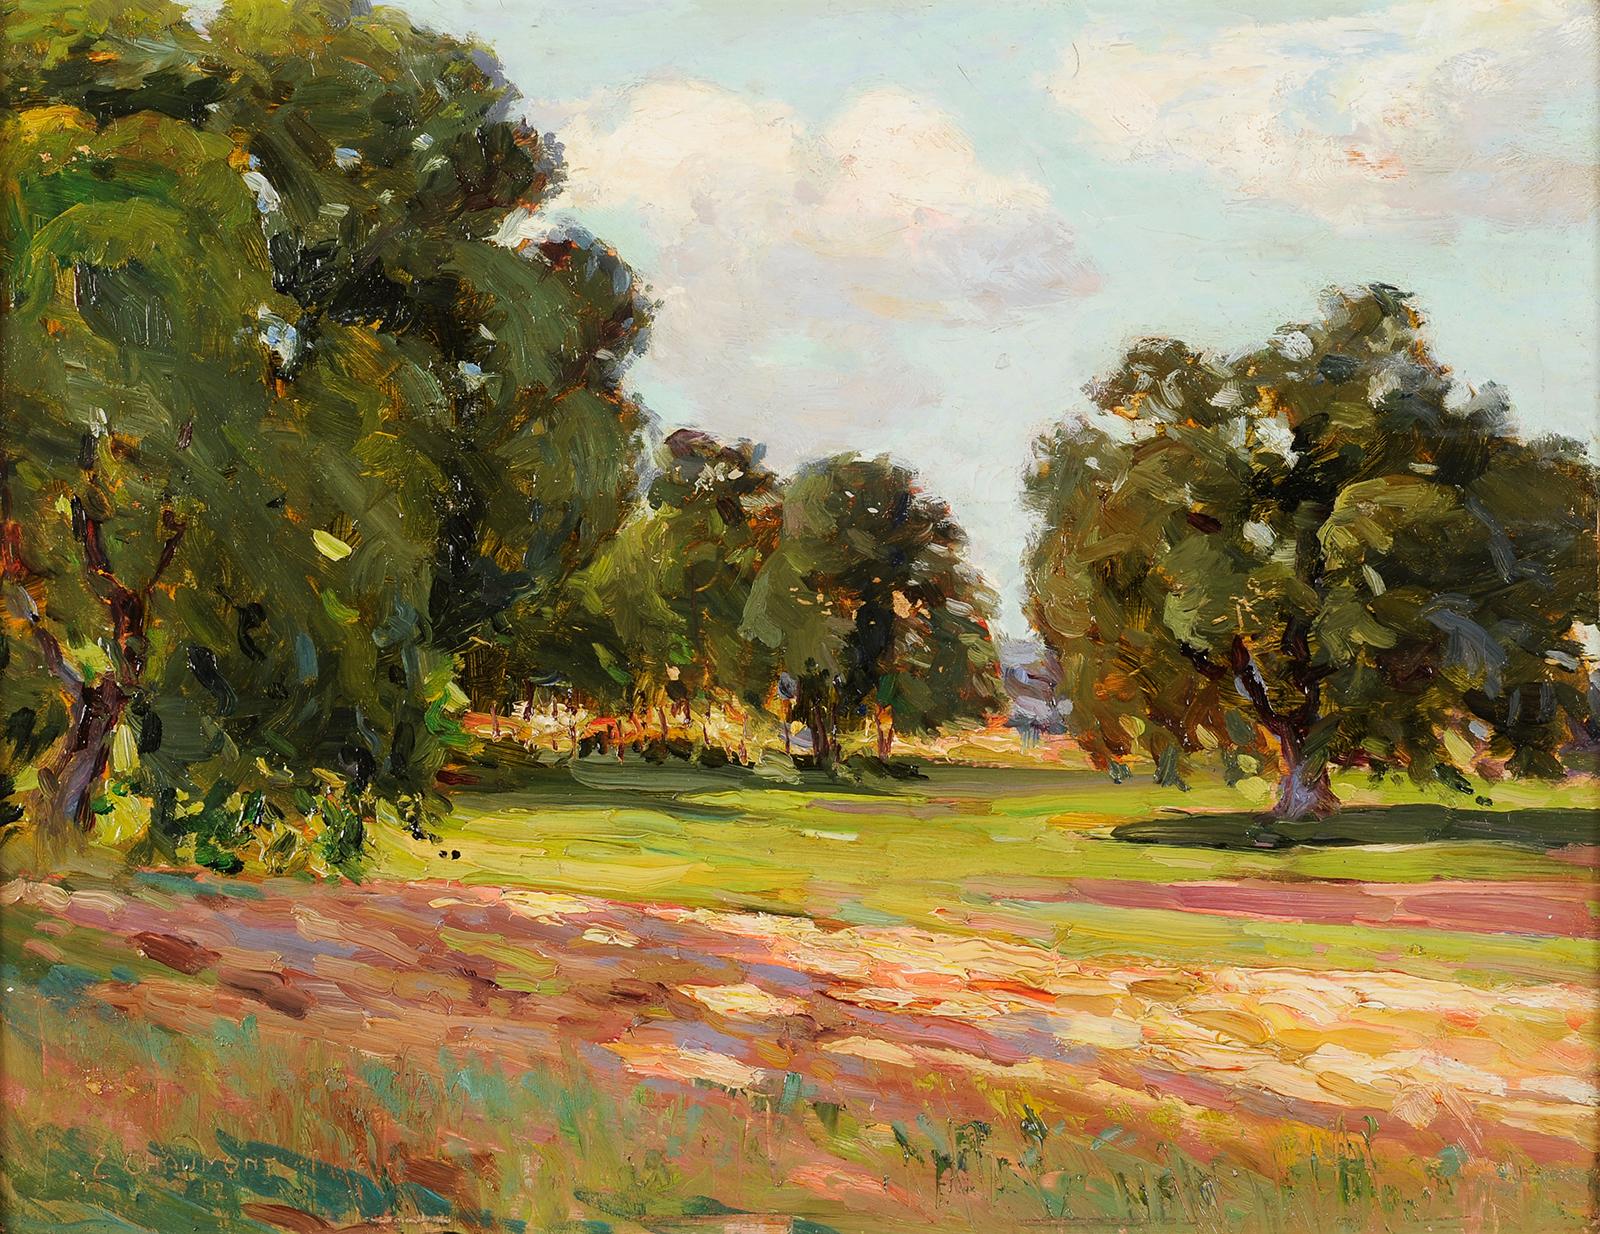 Emile Chaumont (1877-1927) - Summer landscape in Dordogne